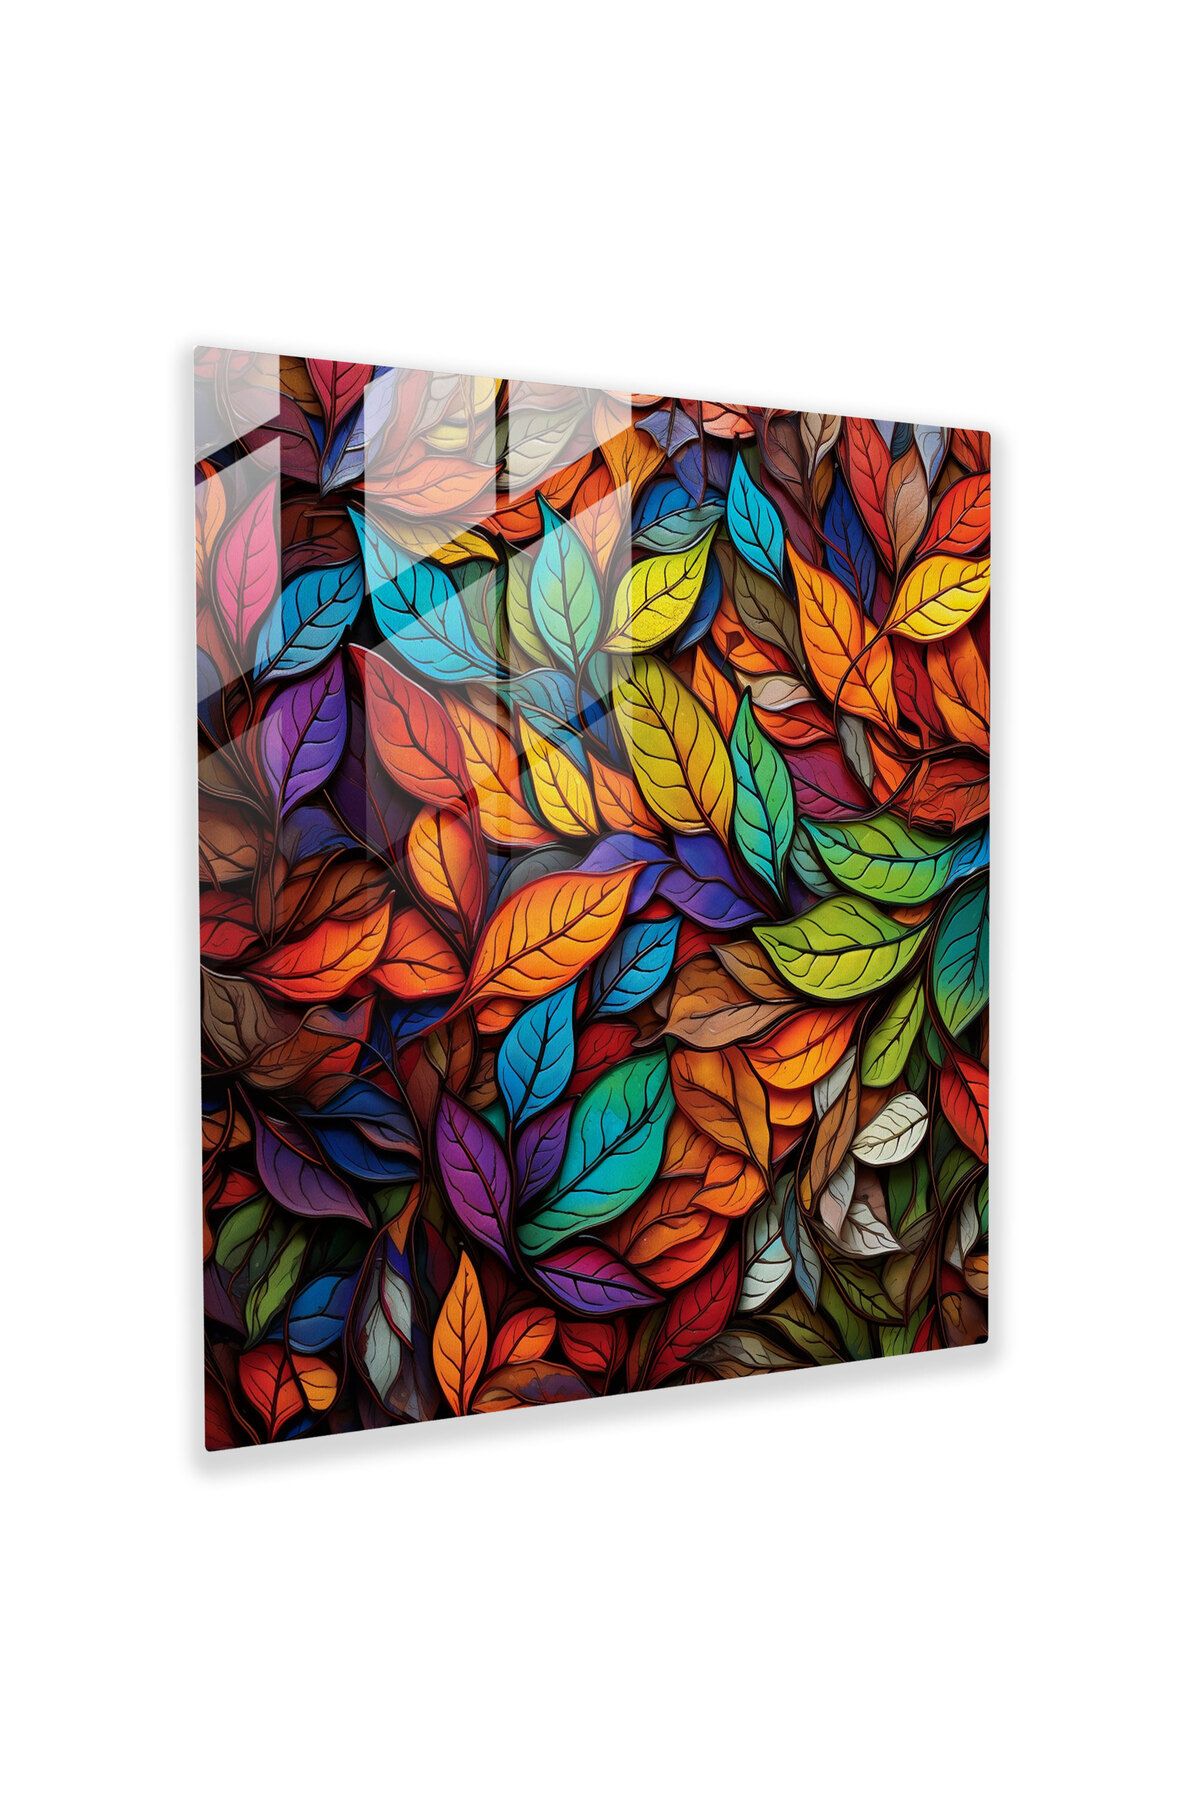 PaintedAnarchy Sonbahar Mozaik Cam Tablo - Sonbahar, Sonbahar, Vitraydan İlhamlı Sanat Eserleri, Cam Duvar Sanatı